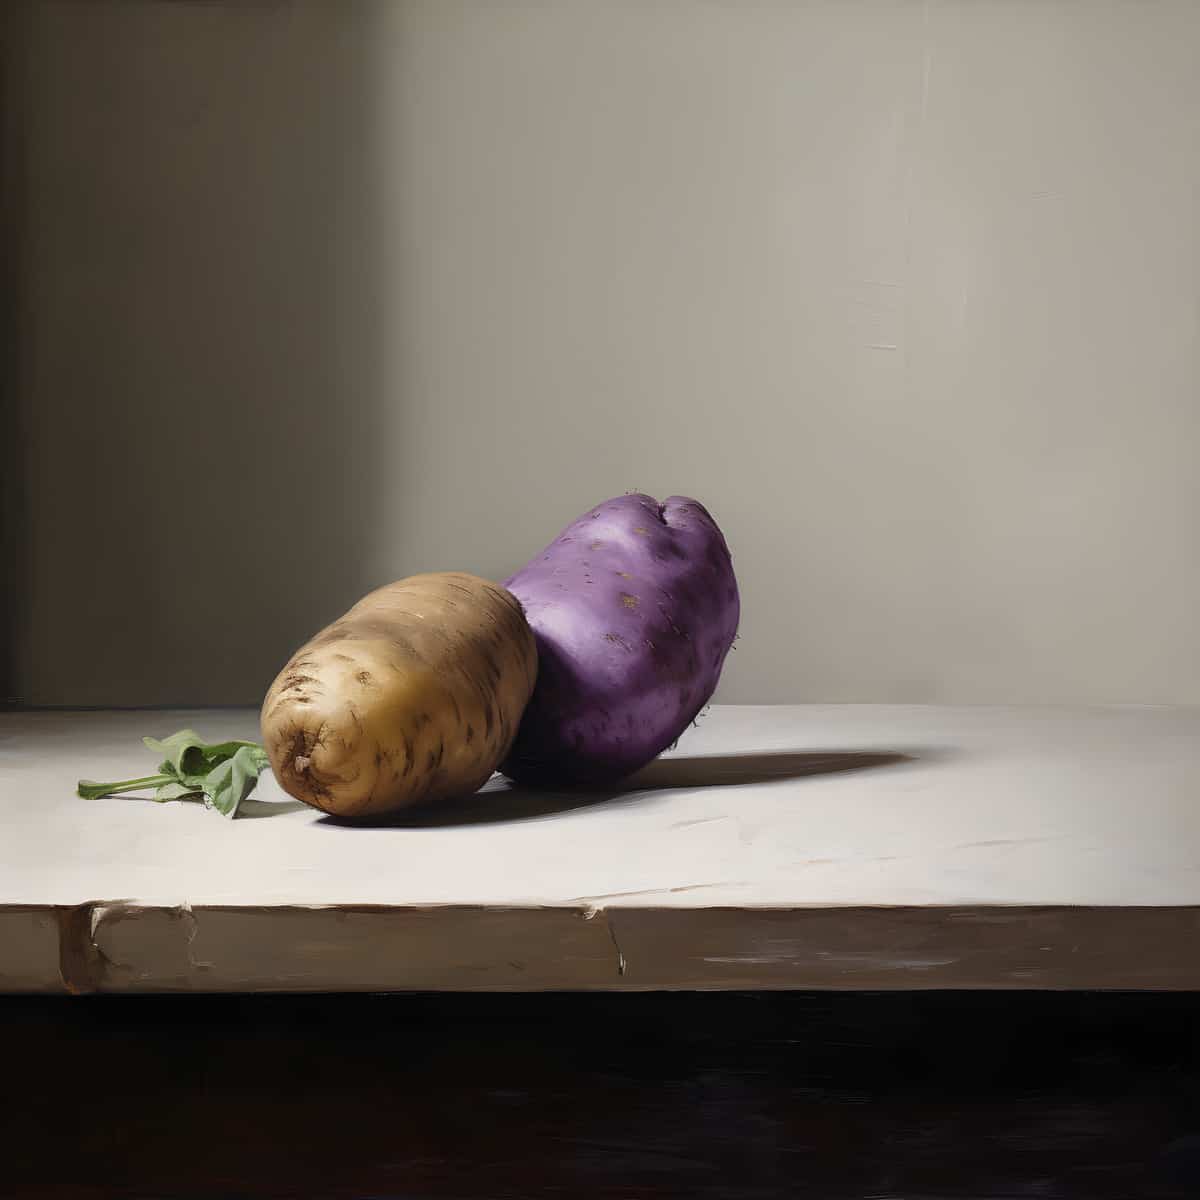 Violette Dauvergne Potatoes on a kitchen counter